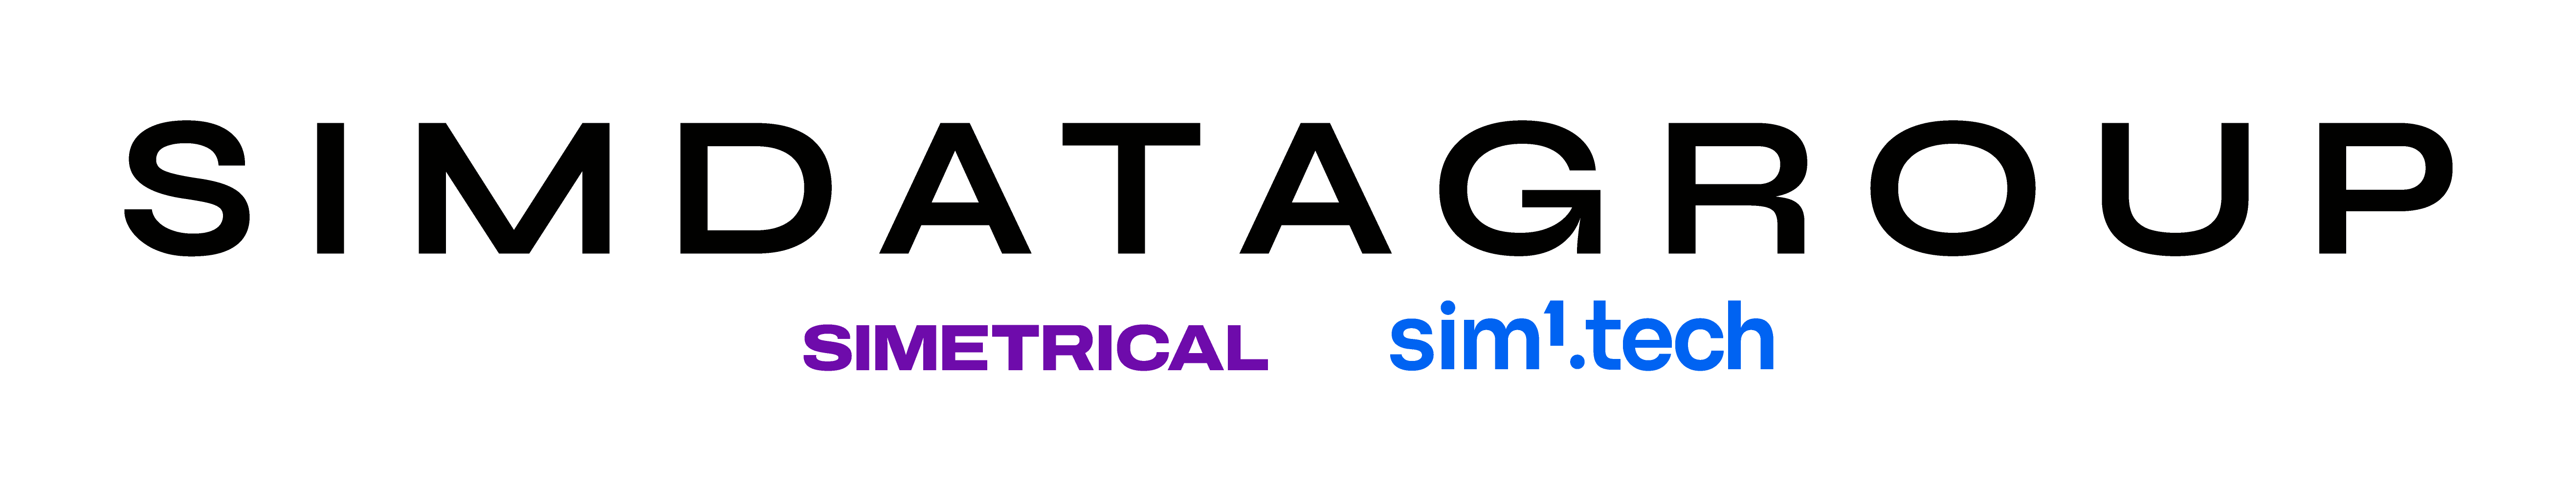 Simdatagroup logo